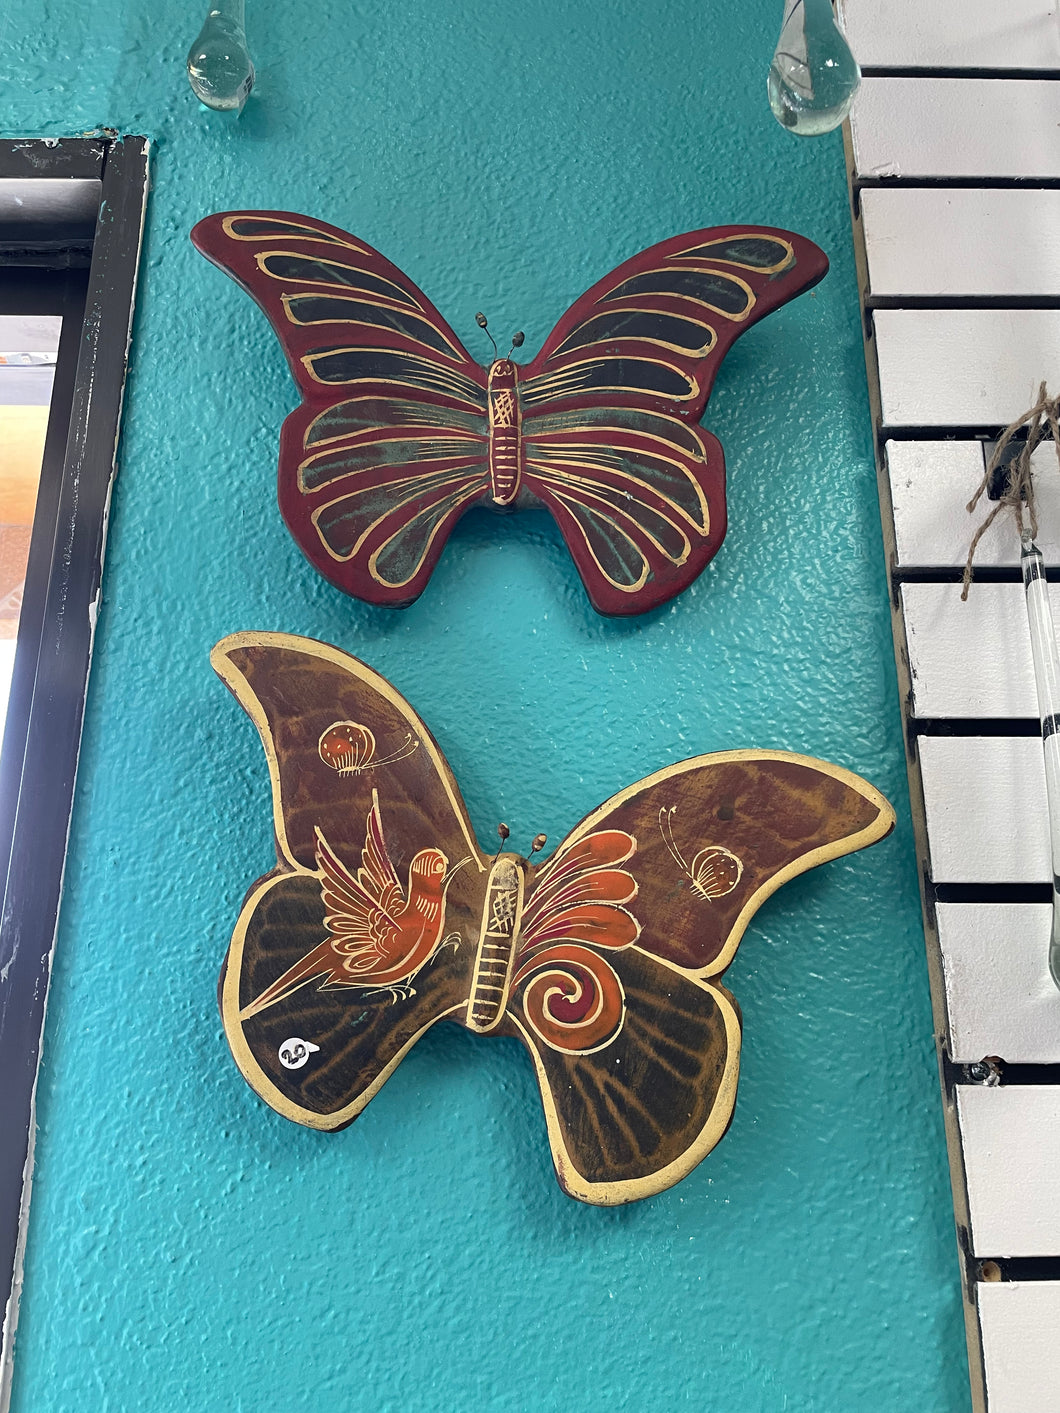 Clay barro butterfly